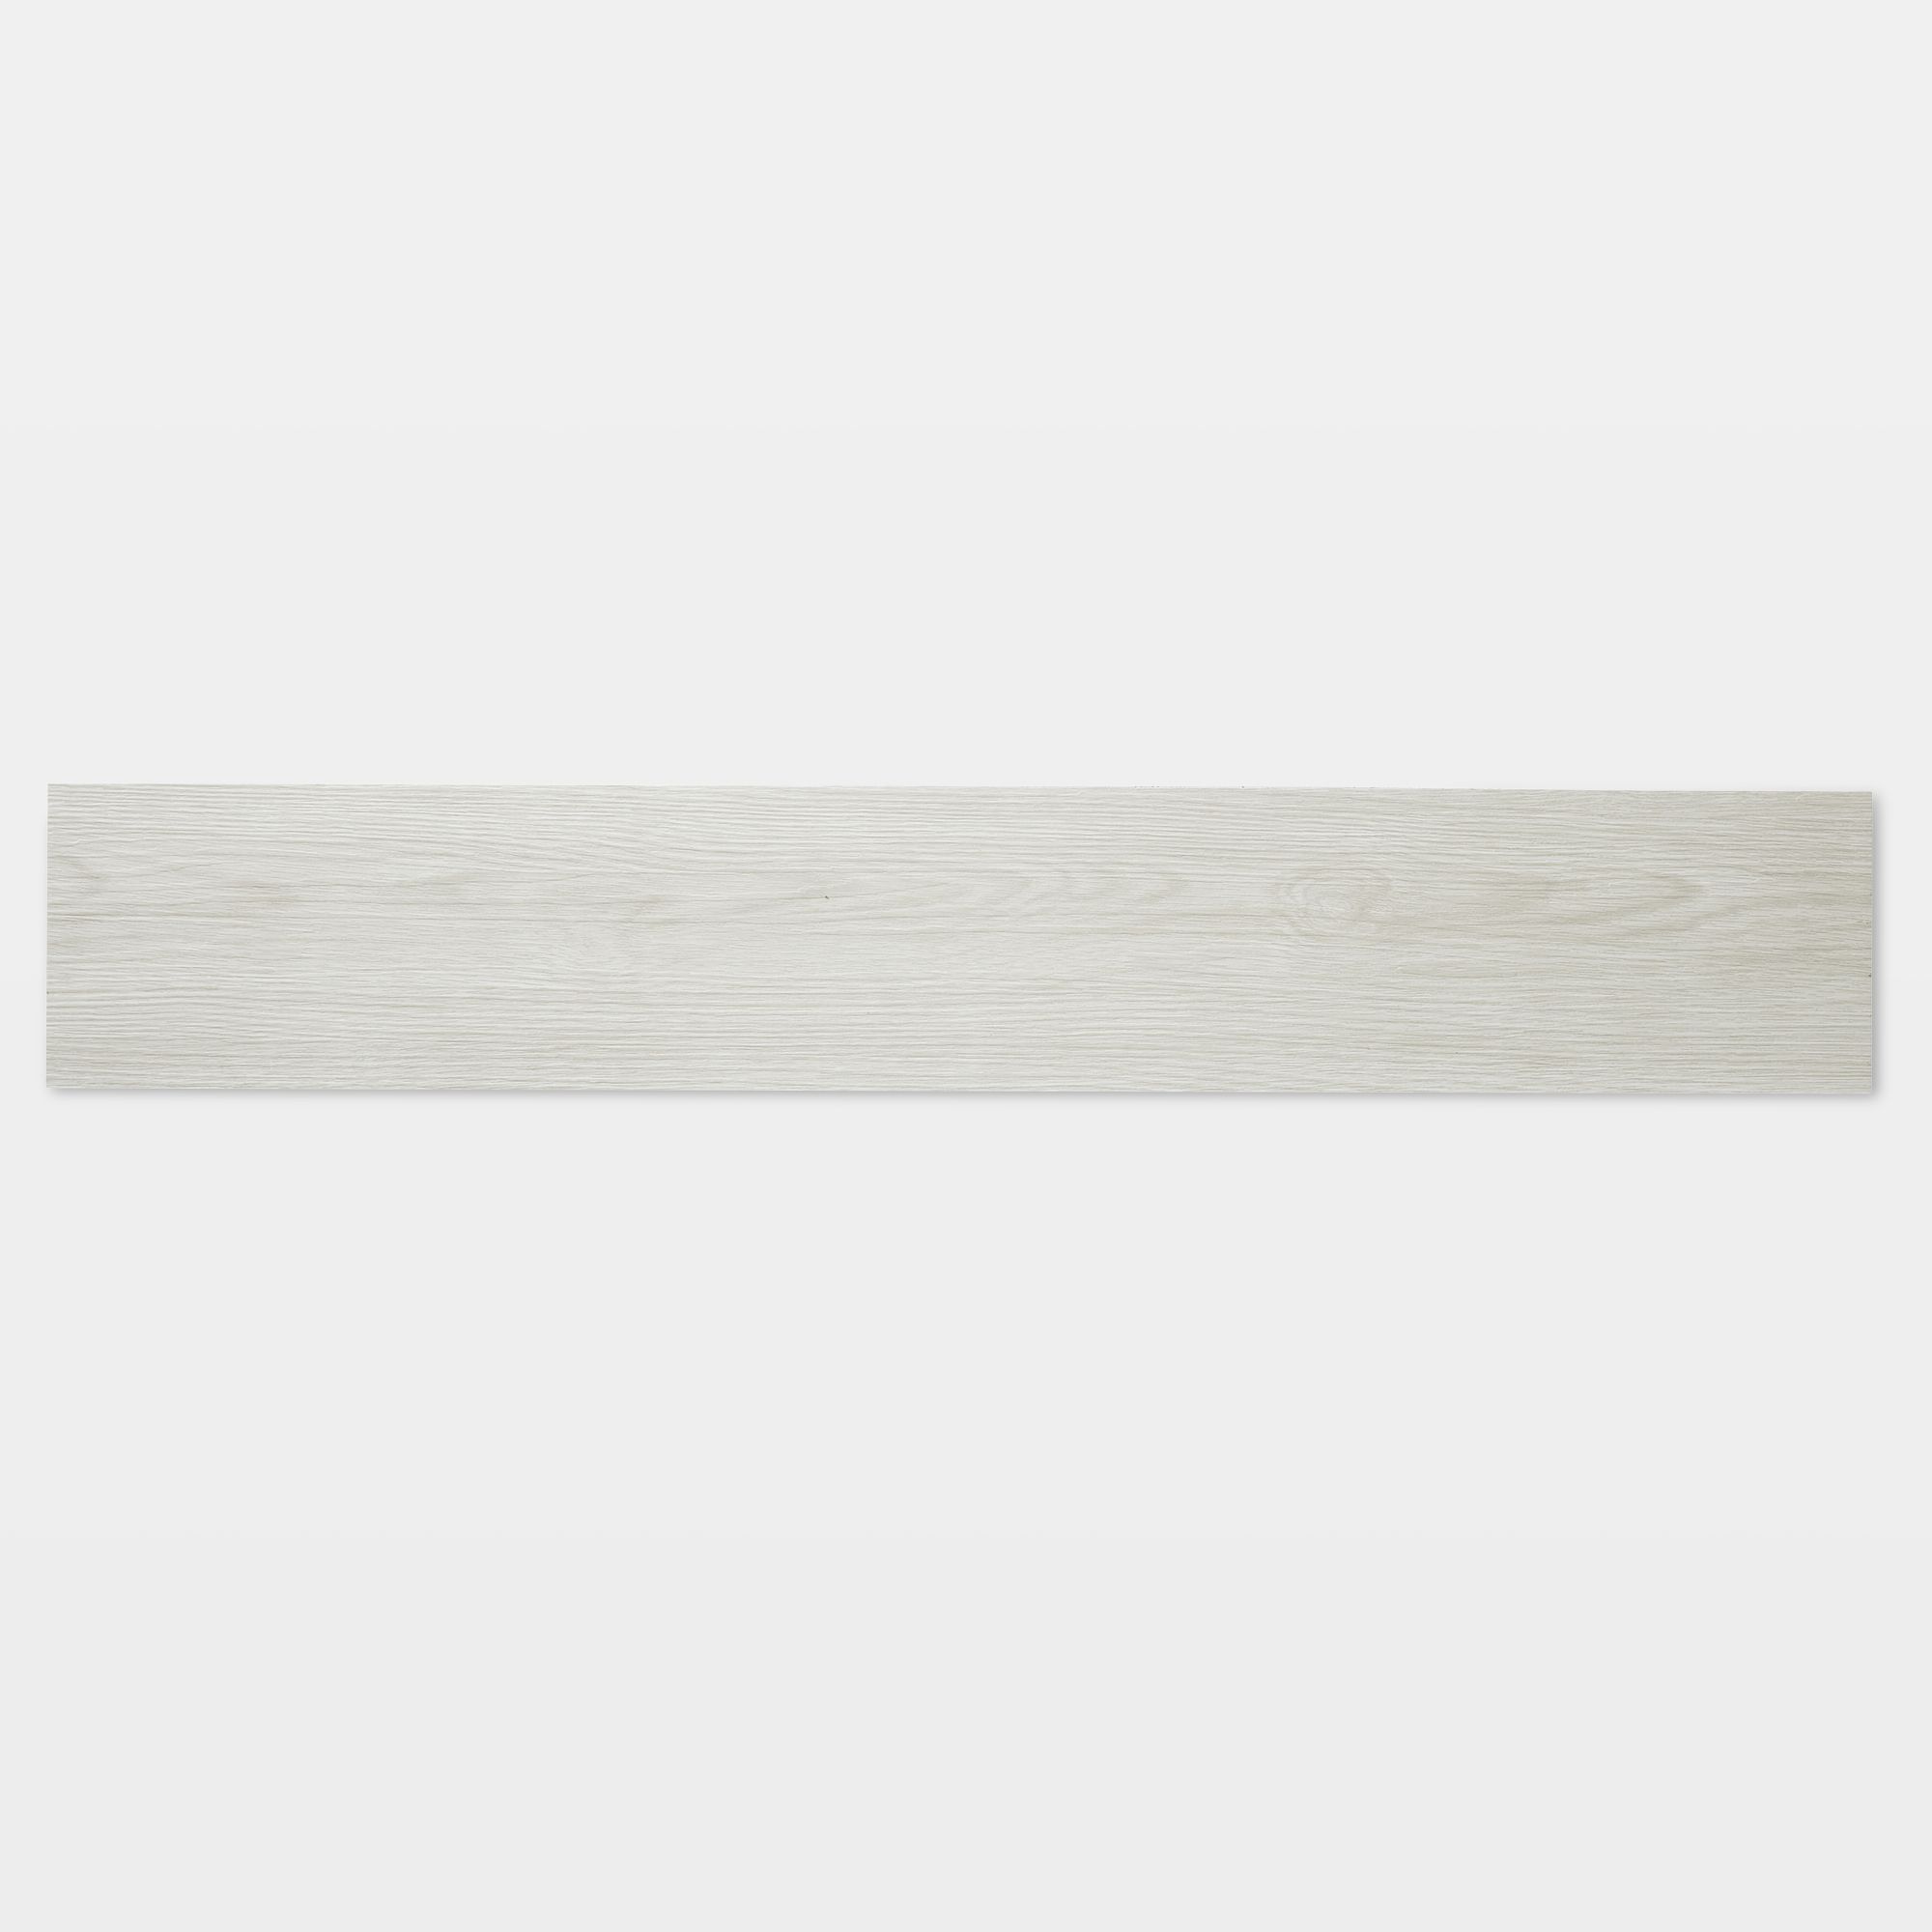 GoodHome Poprock White Wood planks Wood effect Self adhesive Vinyl plank, Pack of 7